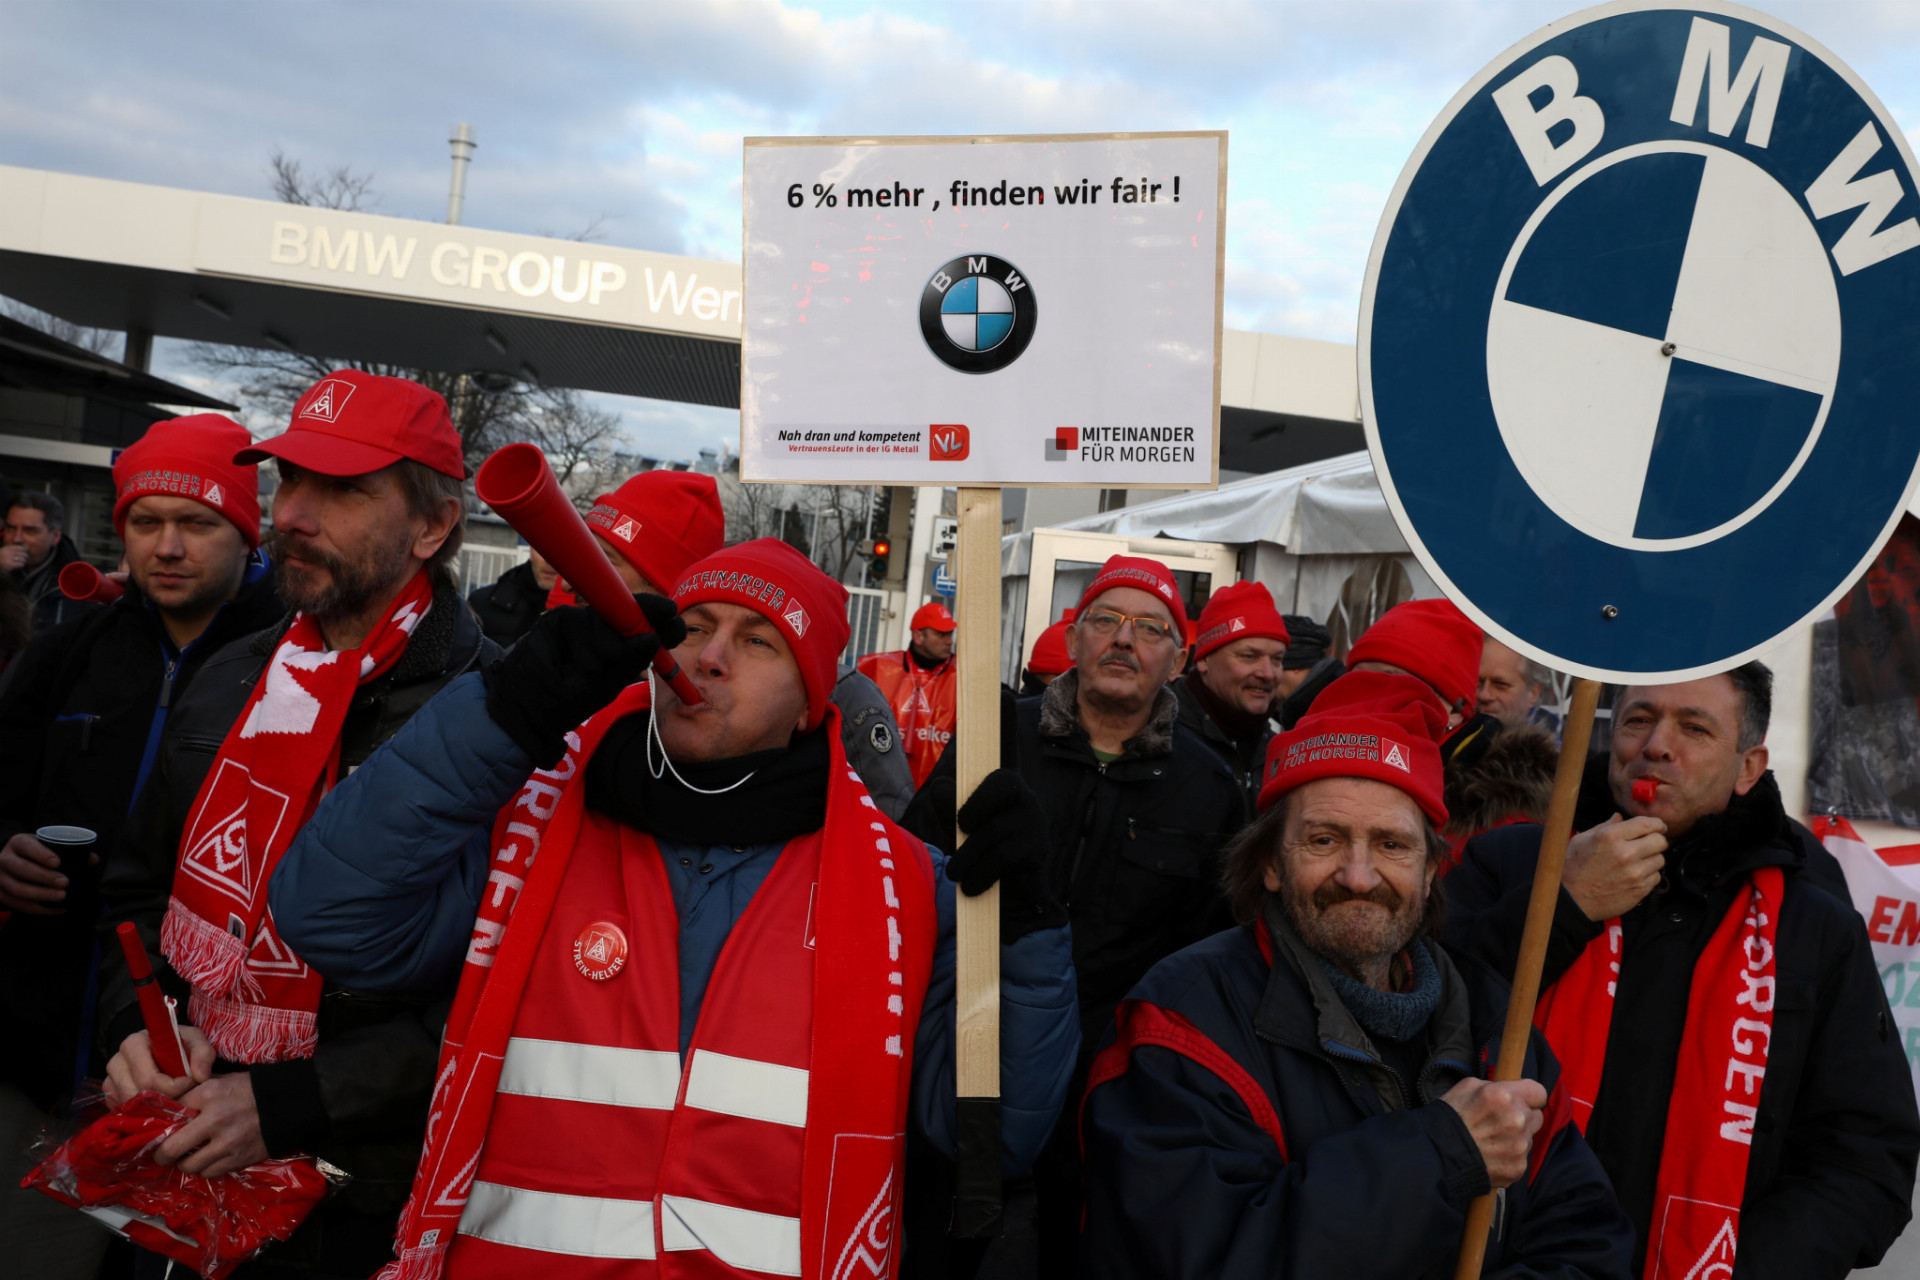 Štrajk zamestnancov v Nemecku